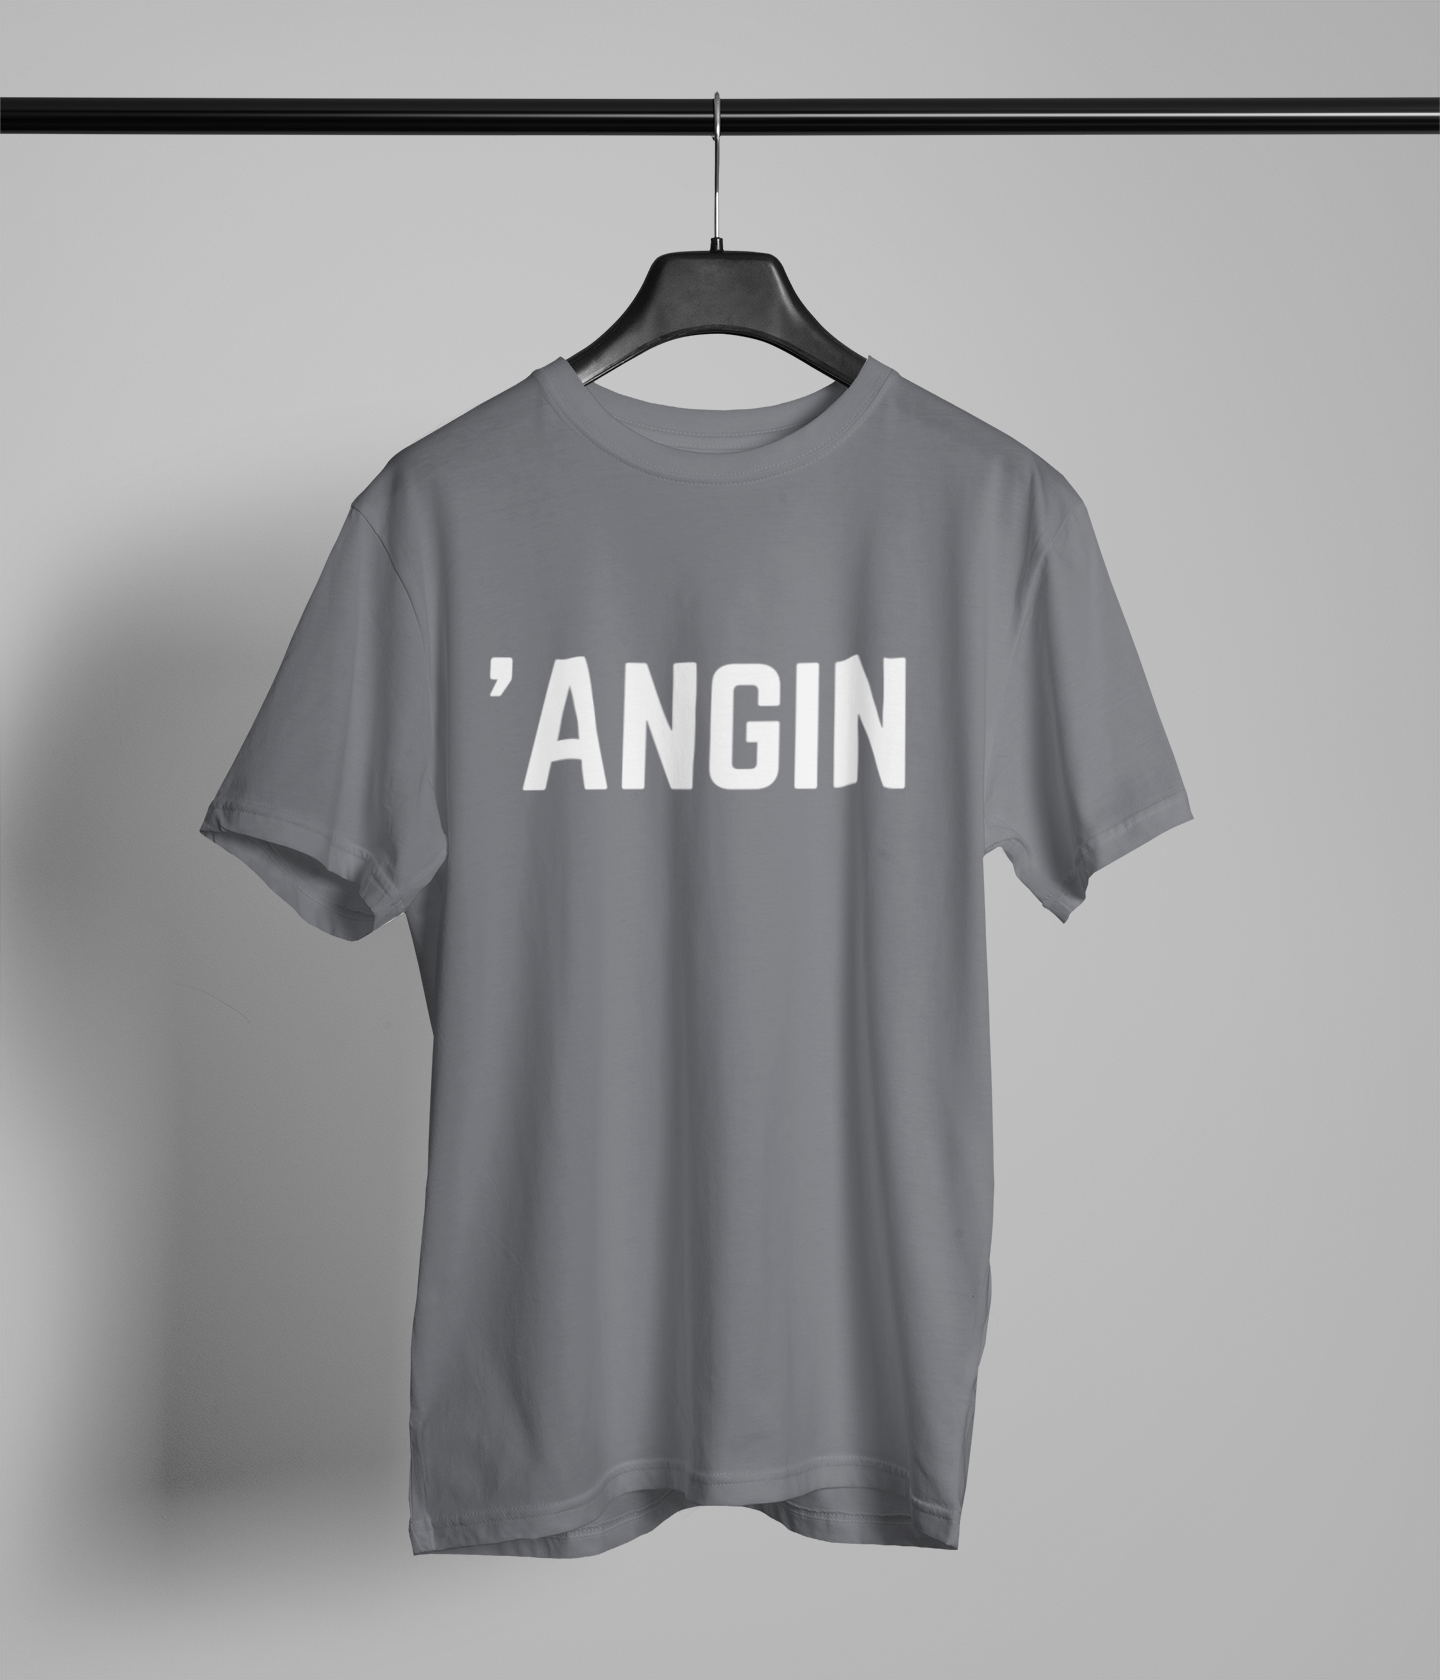 'ANGIN Northern Slang T-Shirt Unisex